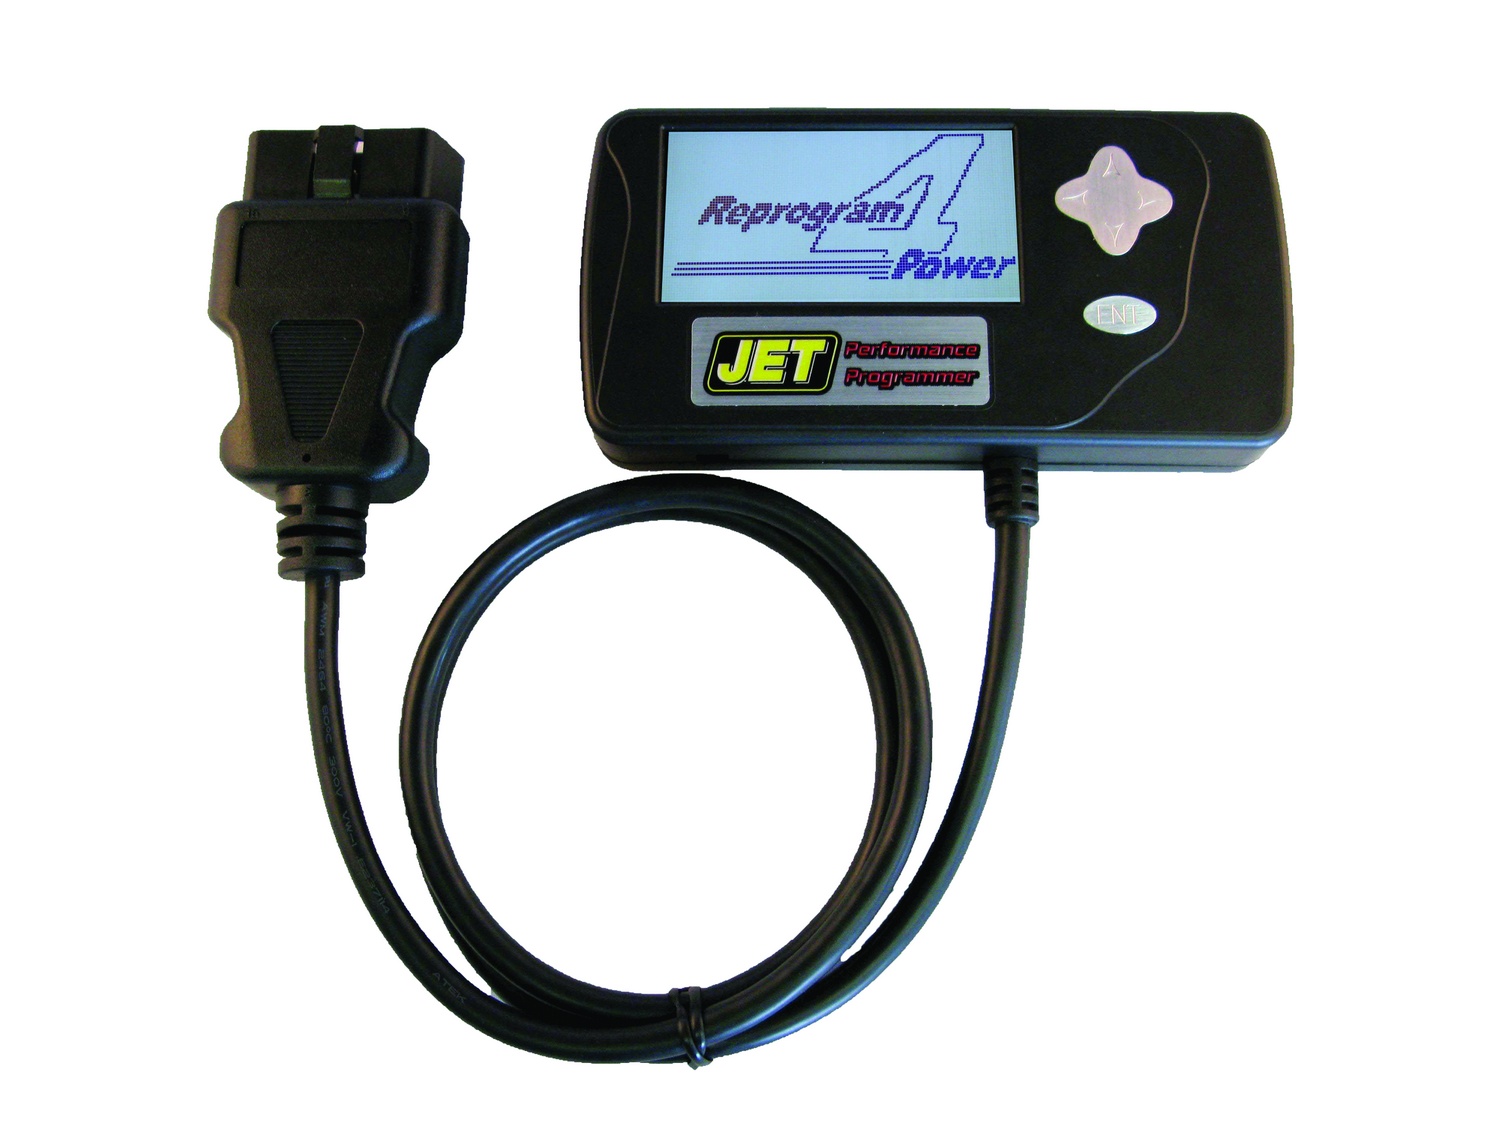 Jet Performance Jet Performance 15043 Program For Power; Jet Performance Programmer